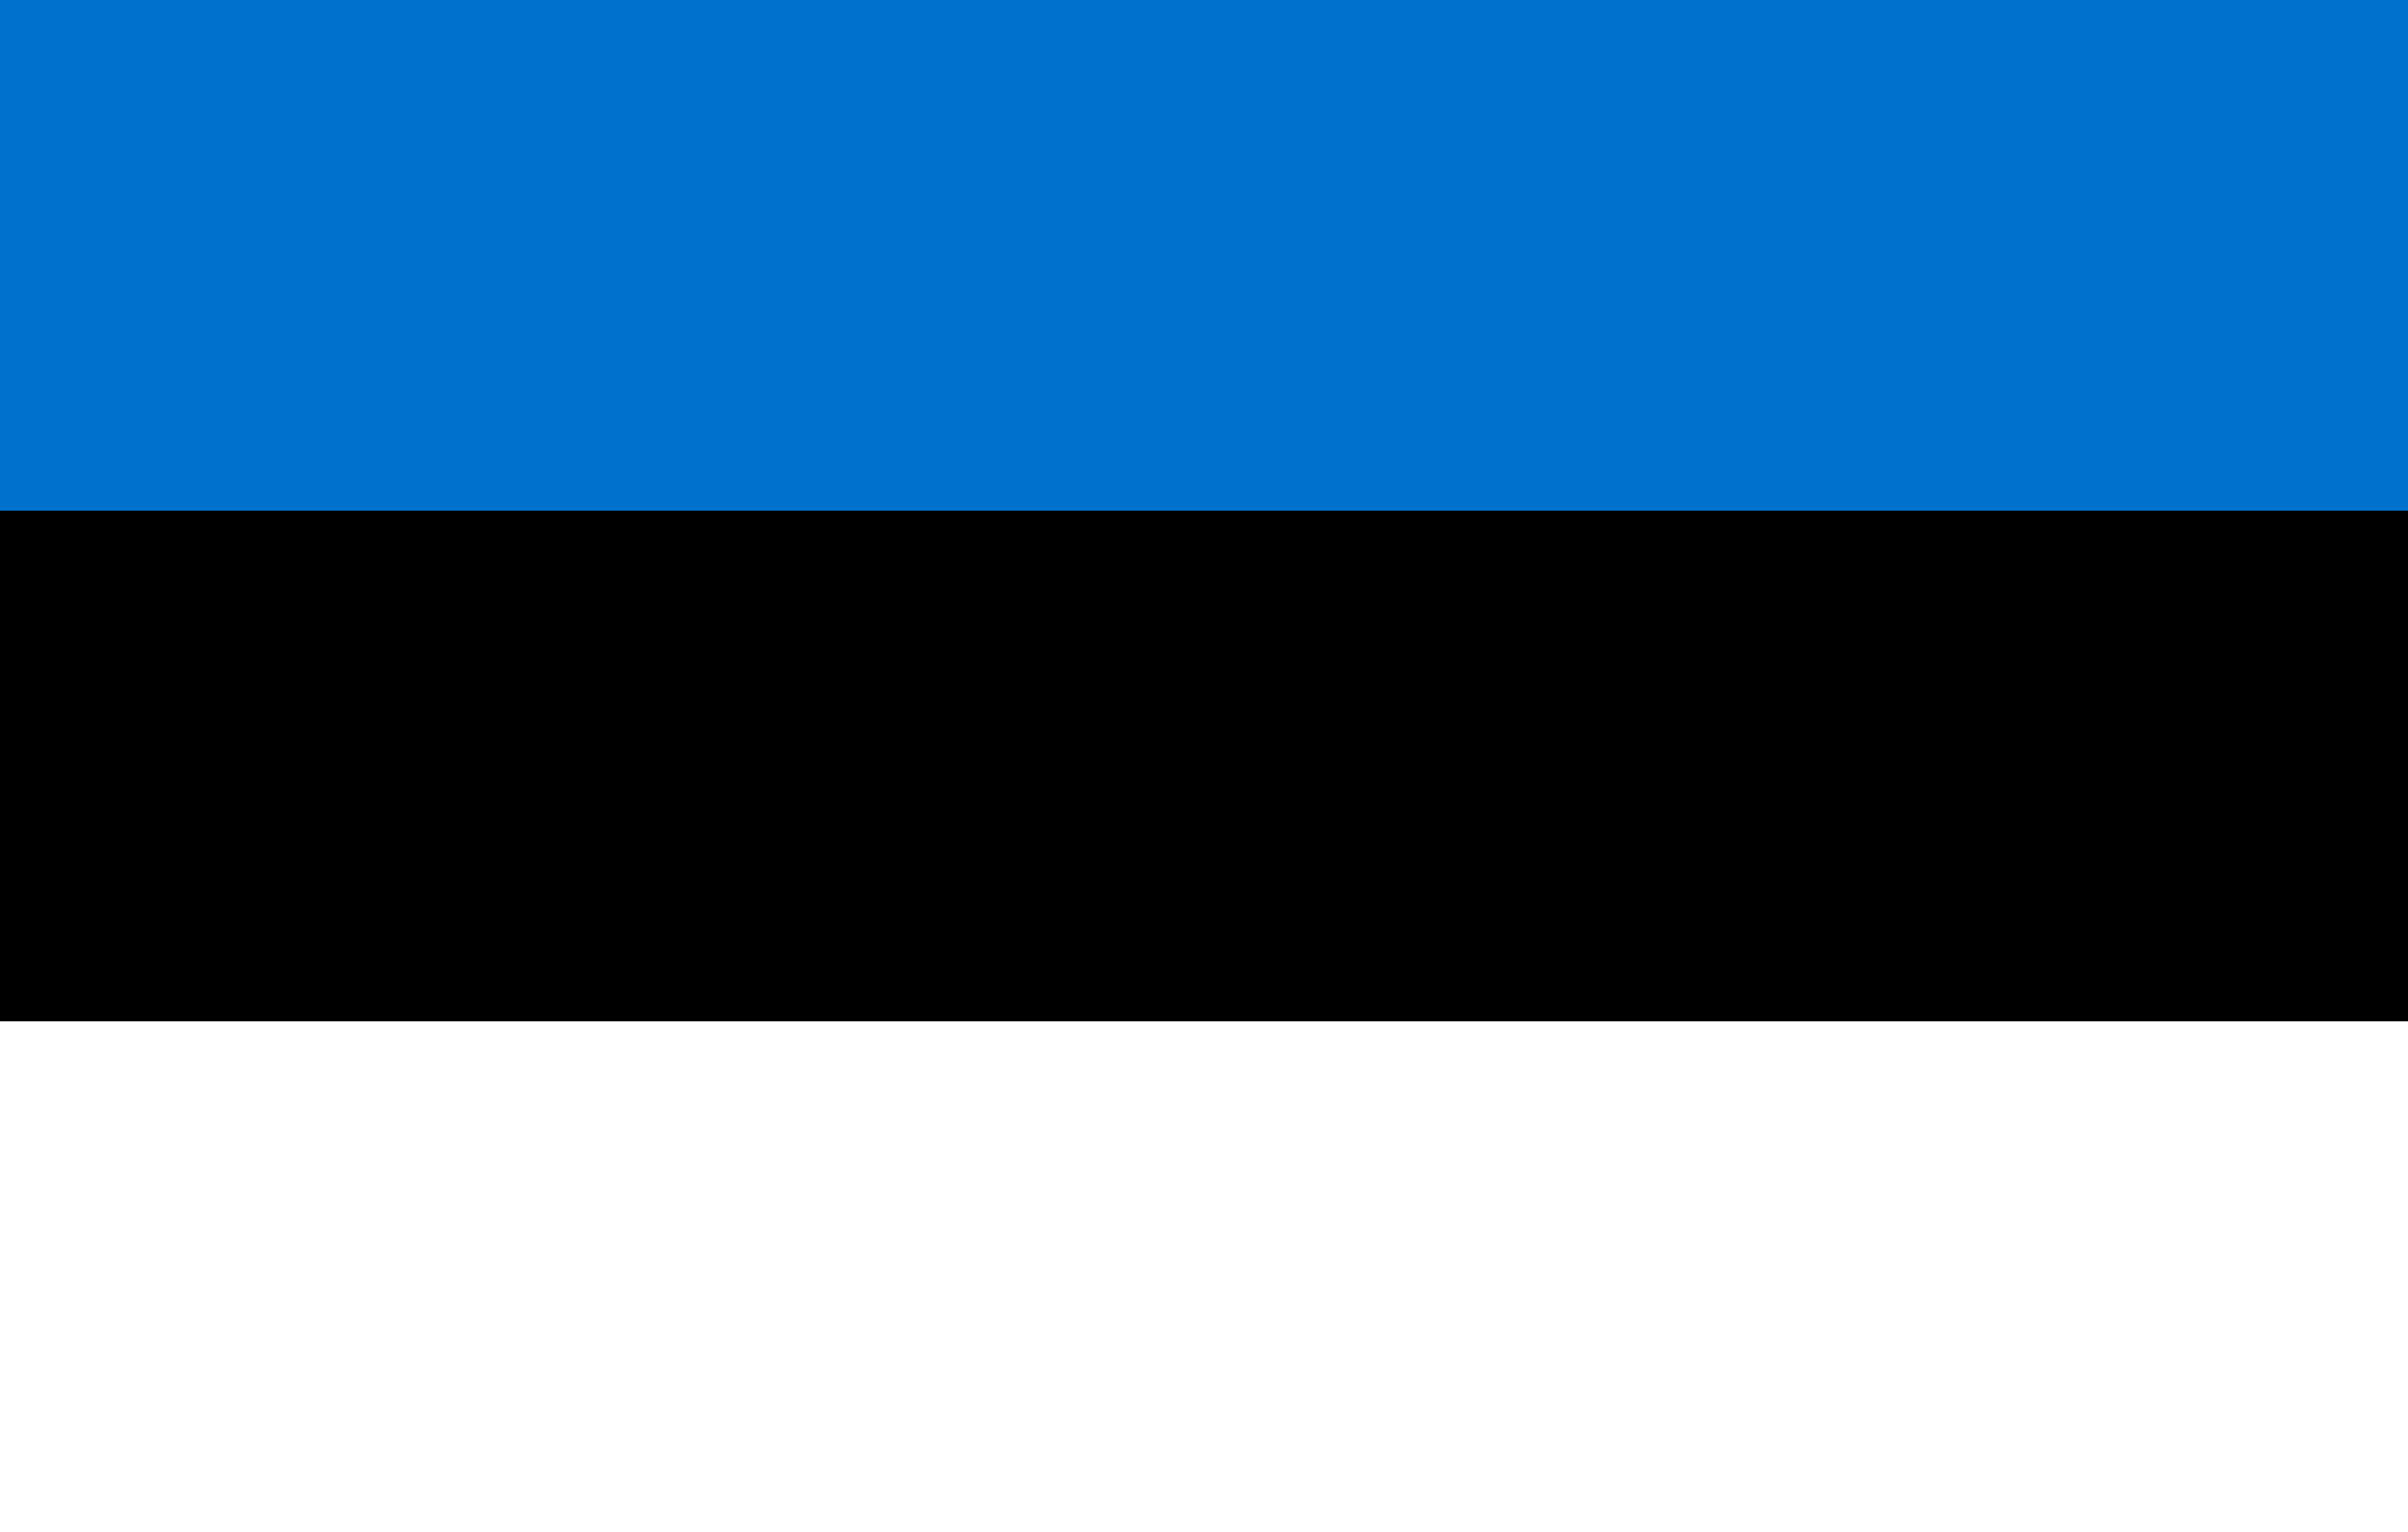 Thumbnail for File:Estonian flag.png.png